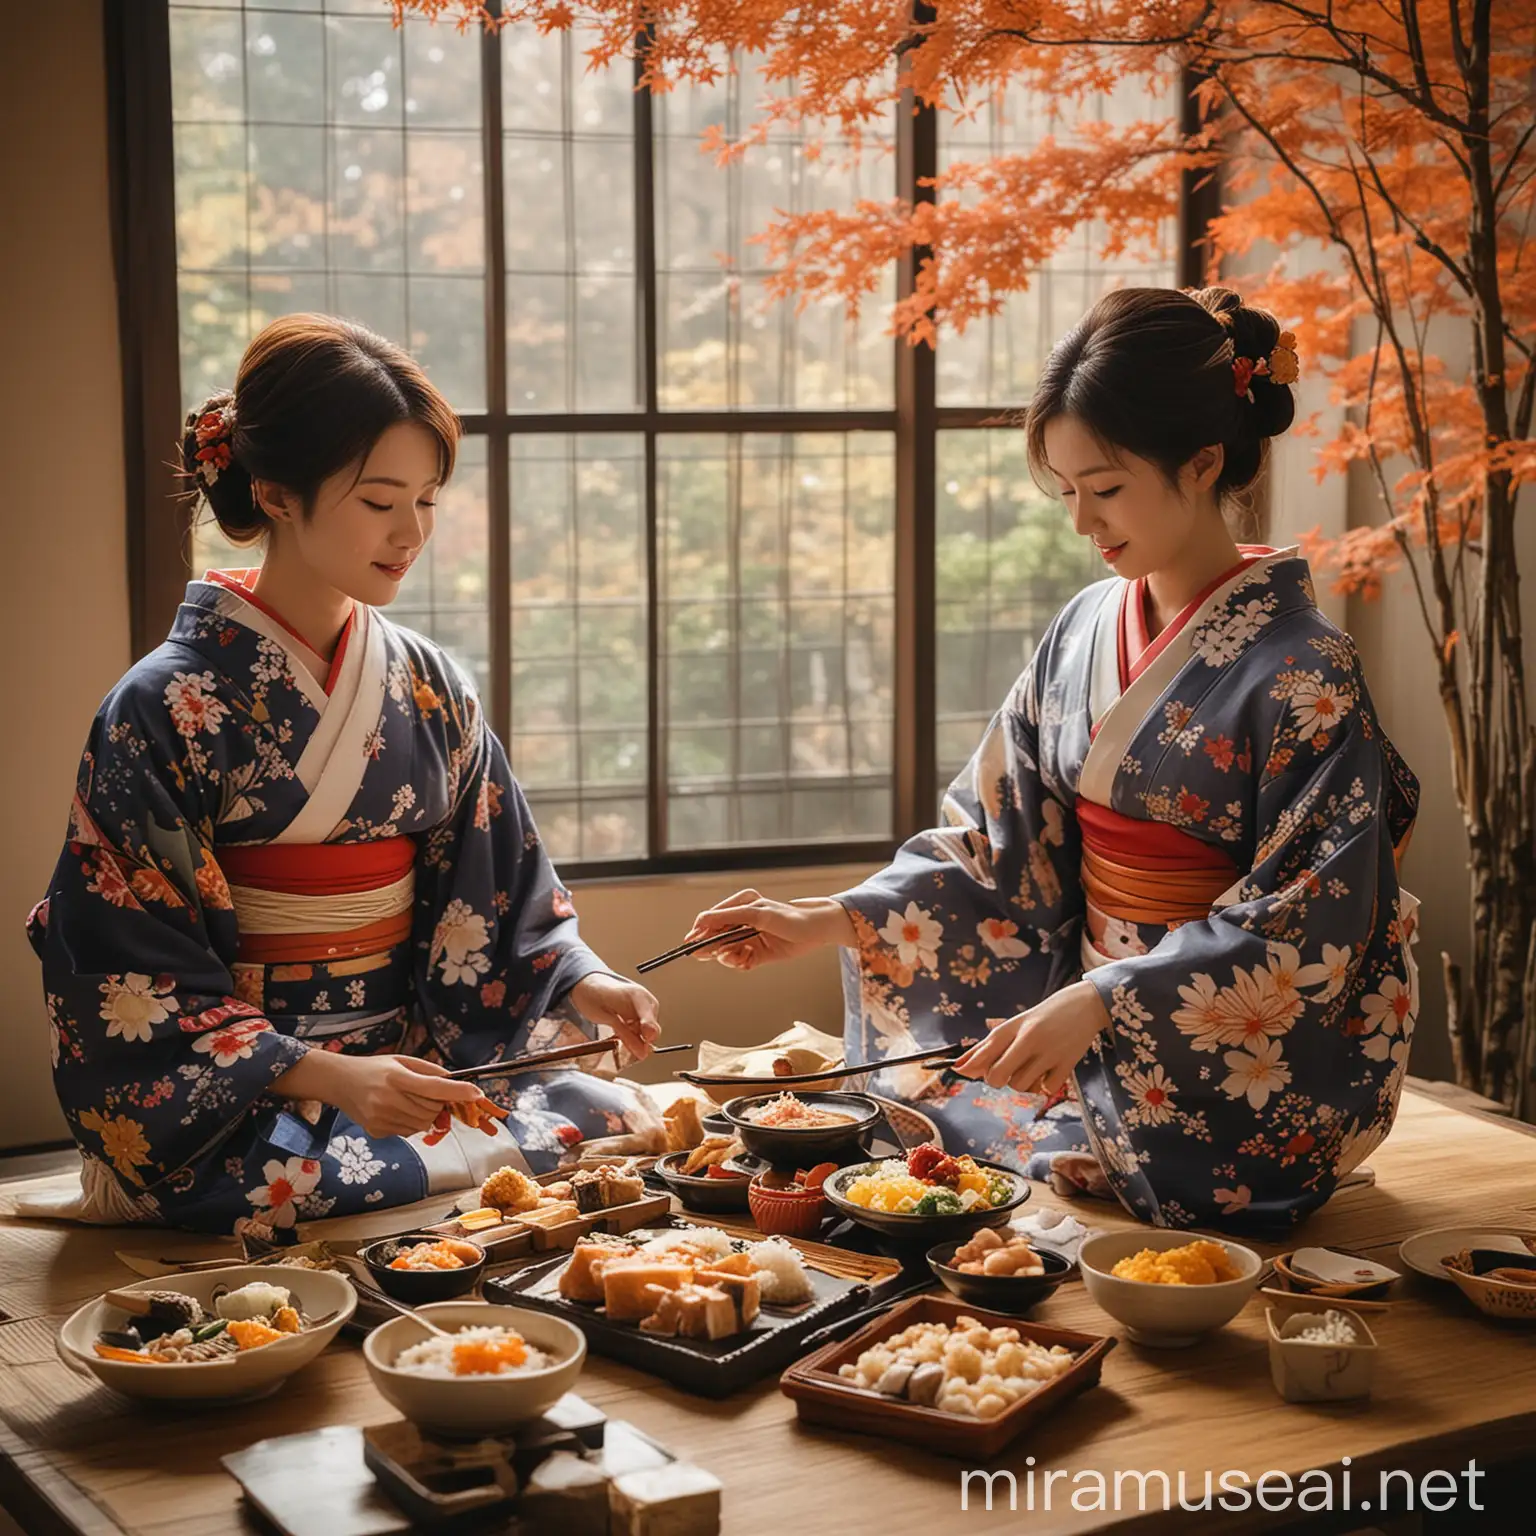 Women Eating Japanese Food in Kimono during Autumn in Japan